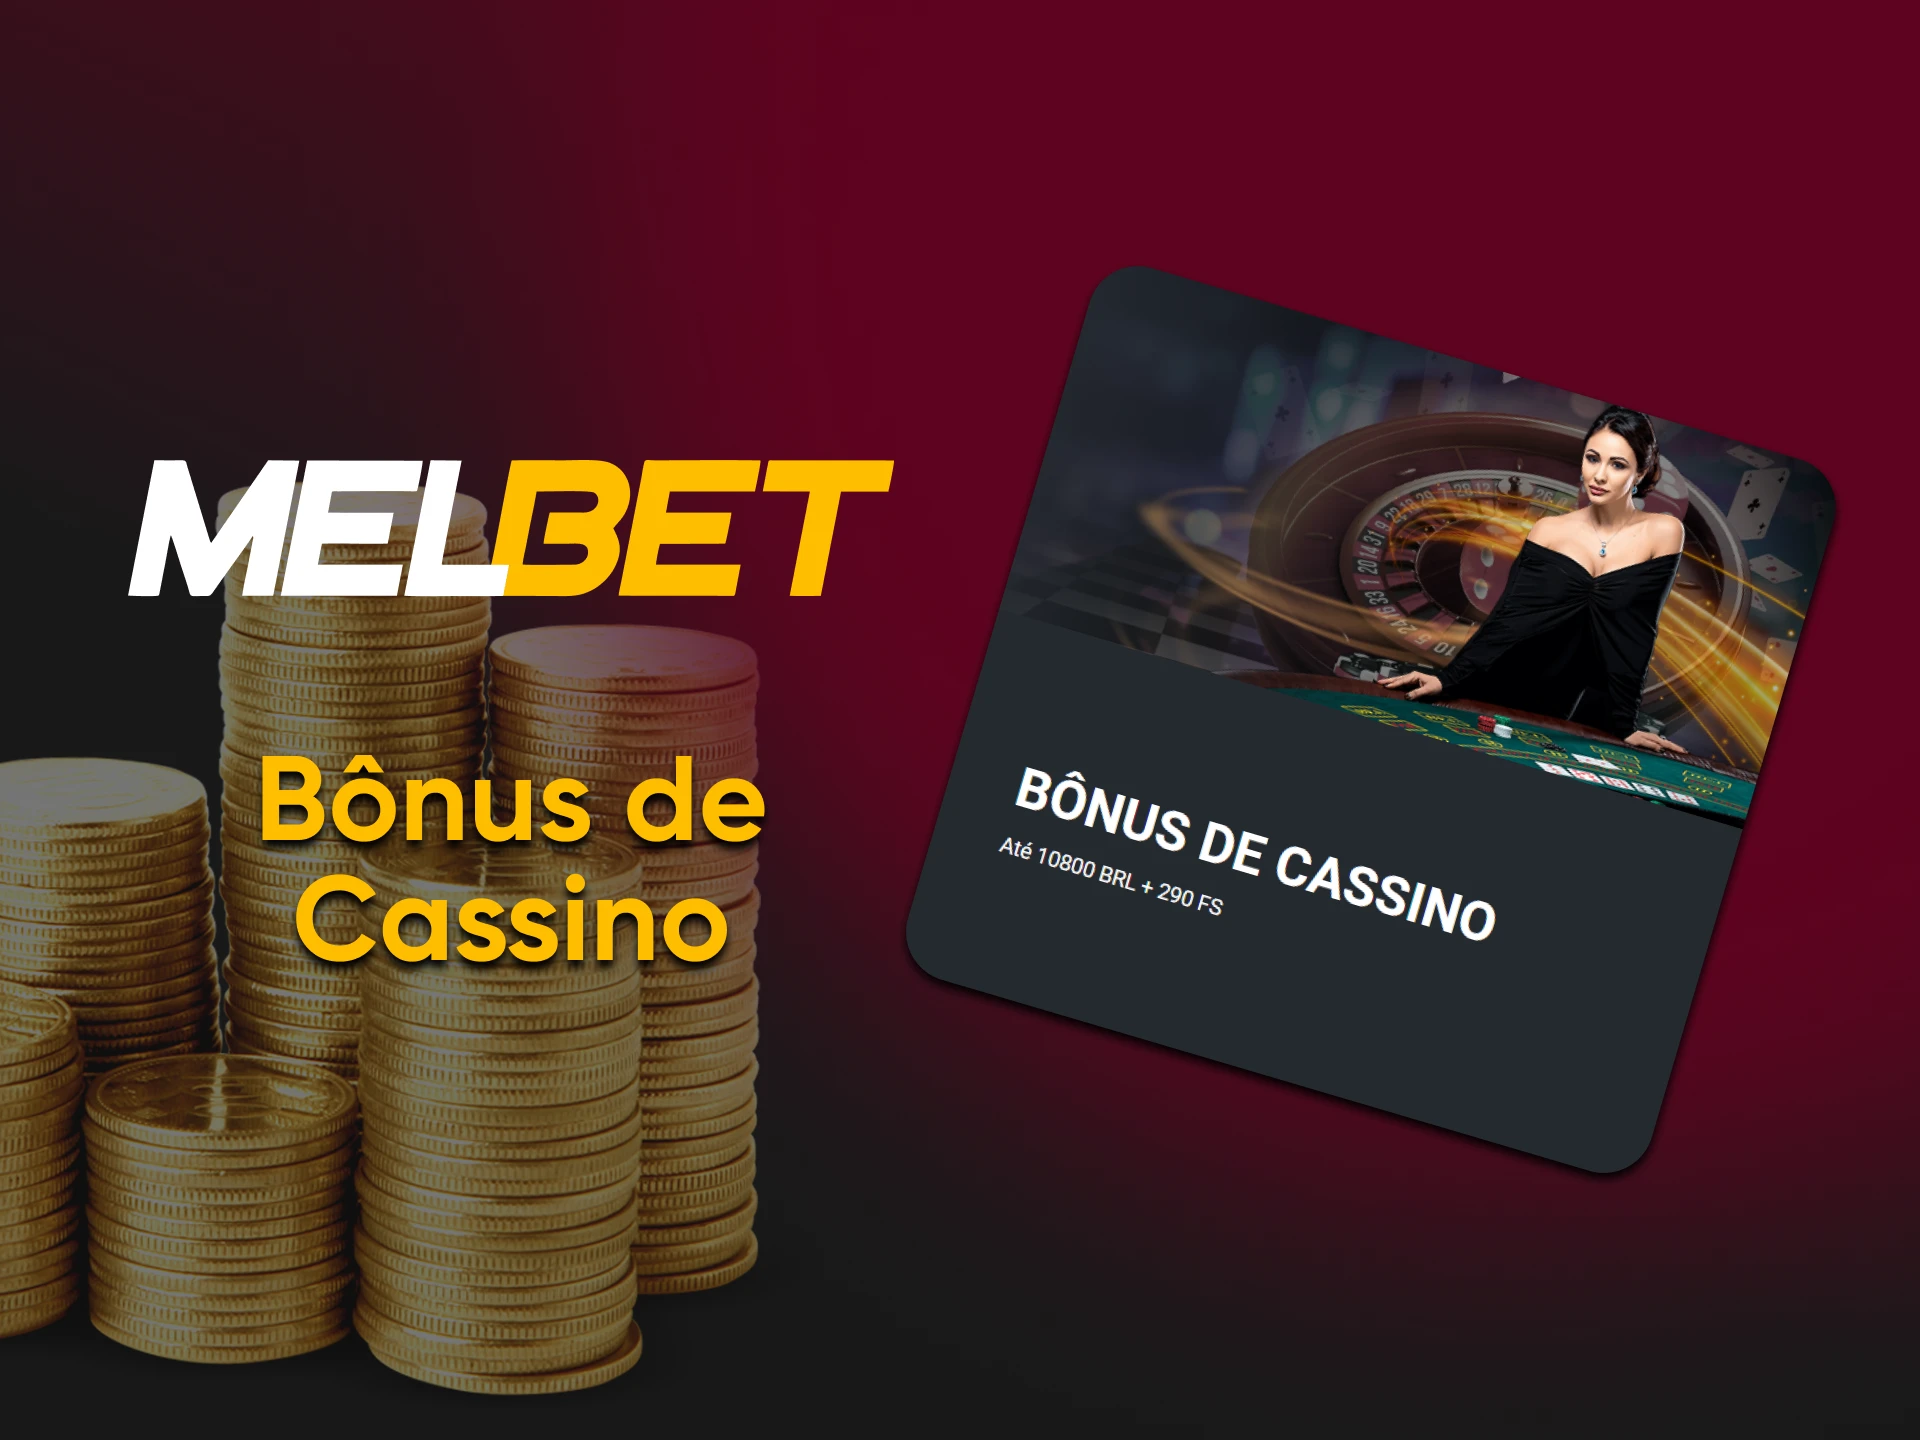 To receive your first Melbet casino bonus, make a deposit.